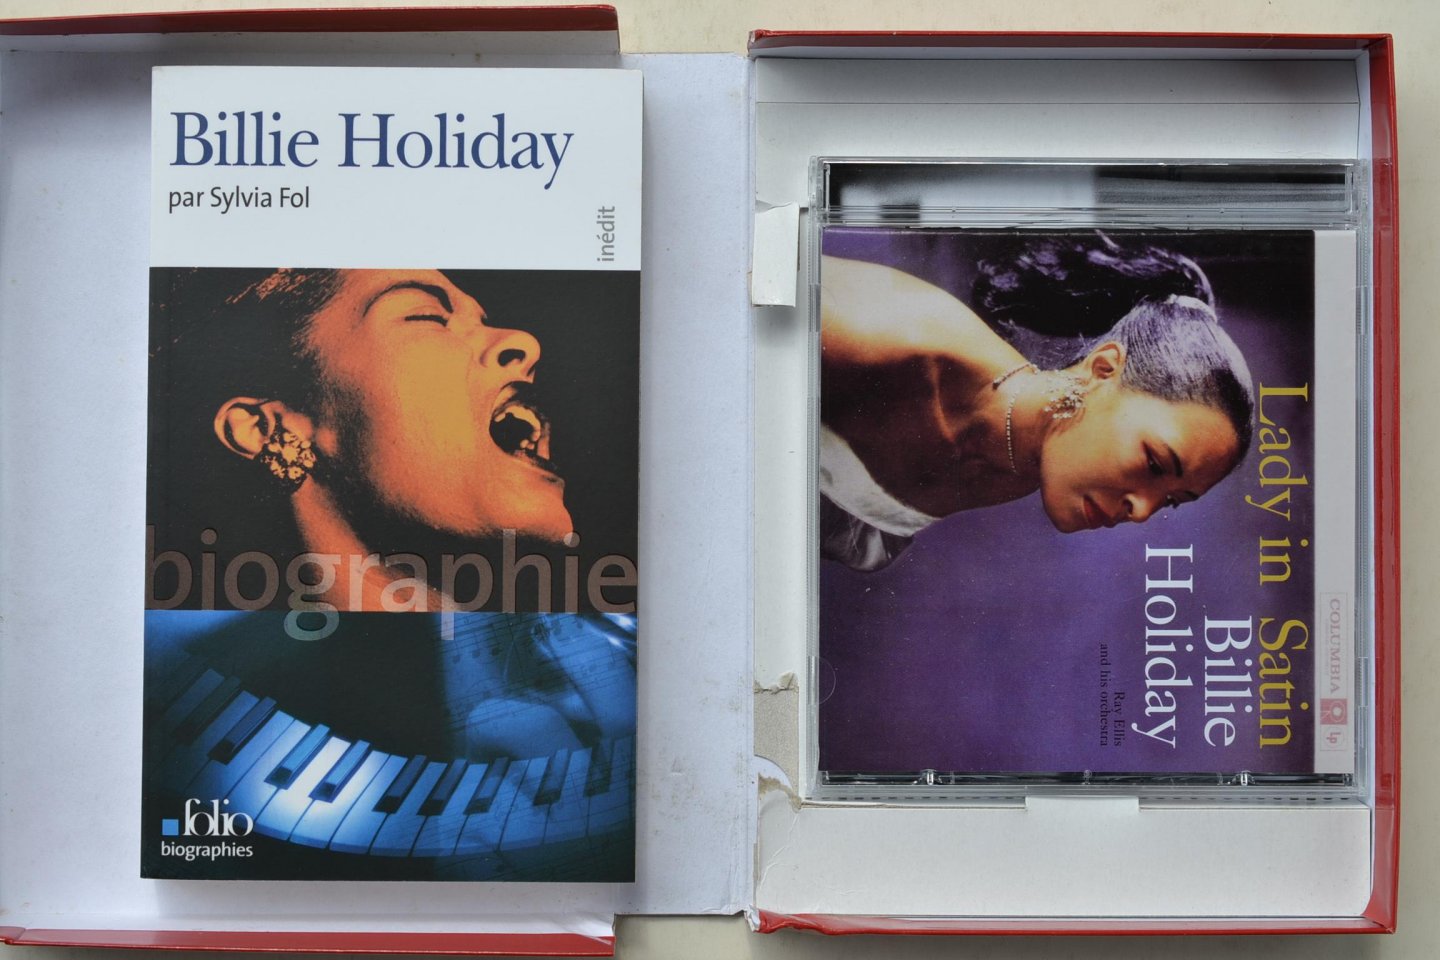 Fol, Sylvia - Billy Holiday - un musicien, une histoire - biographie & CD